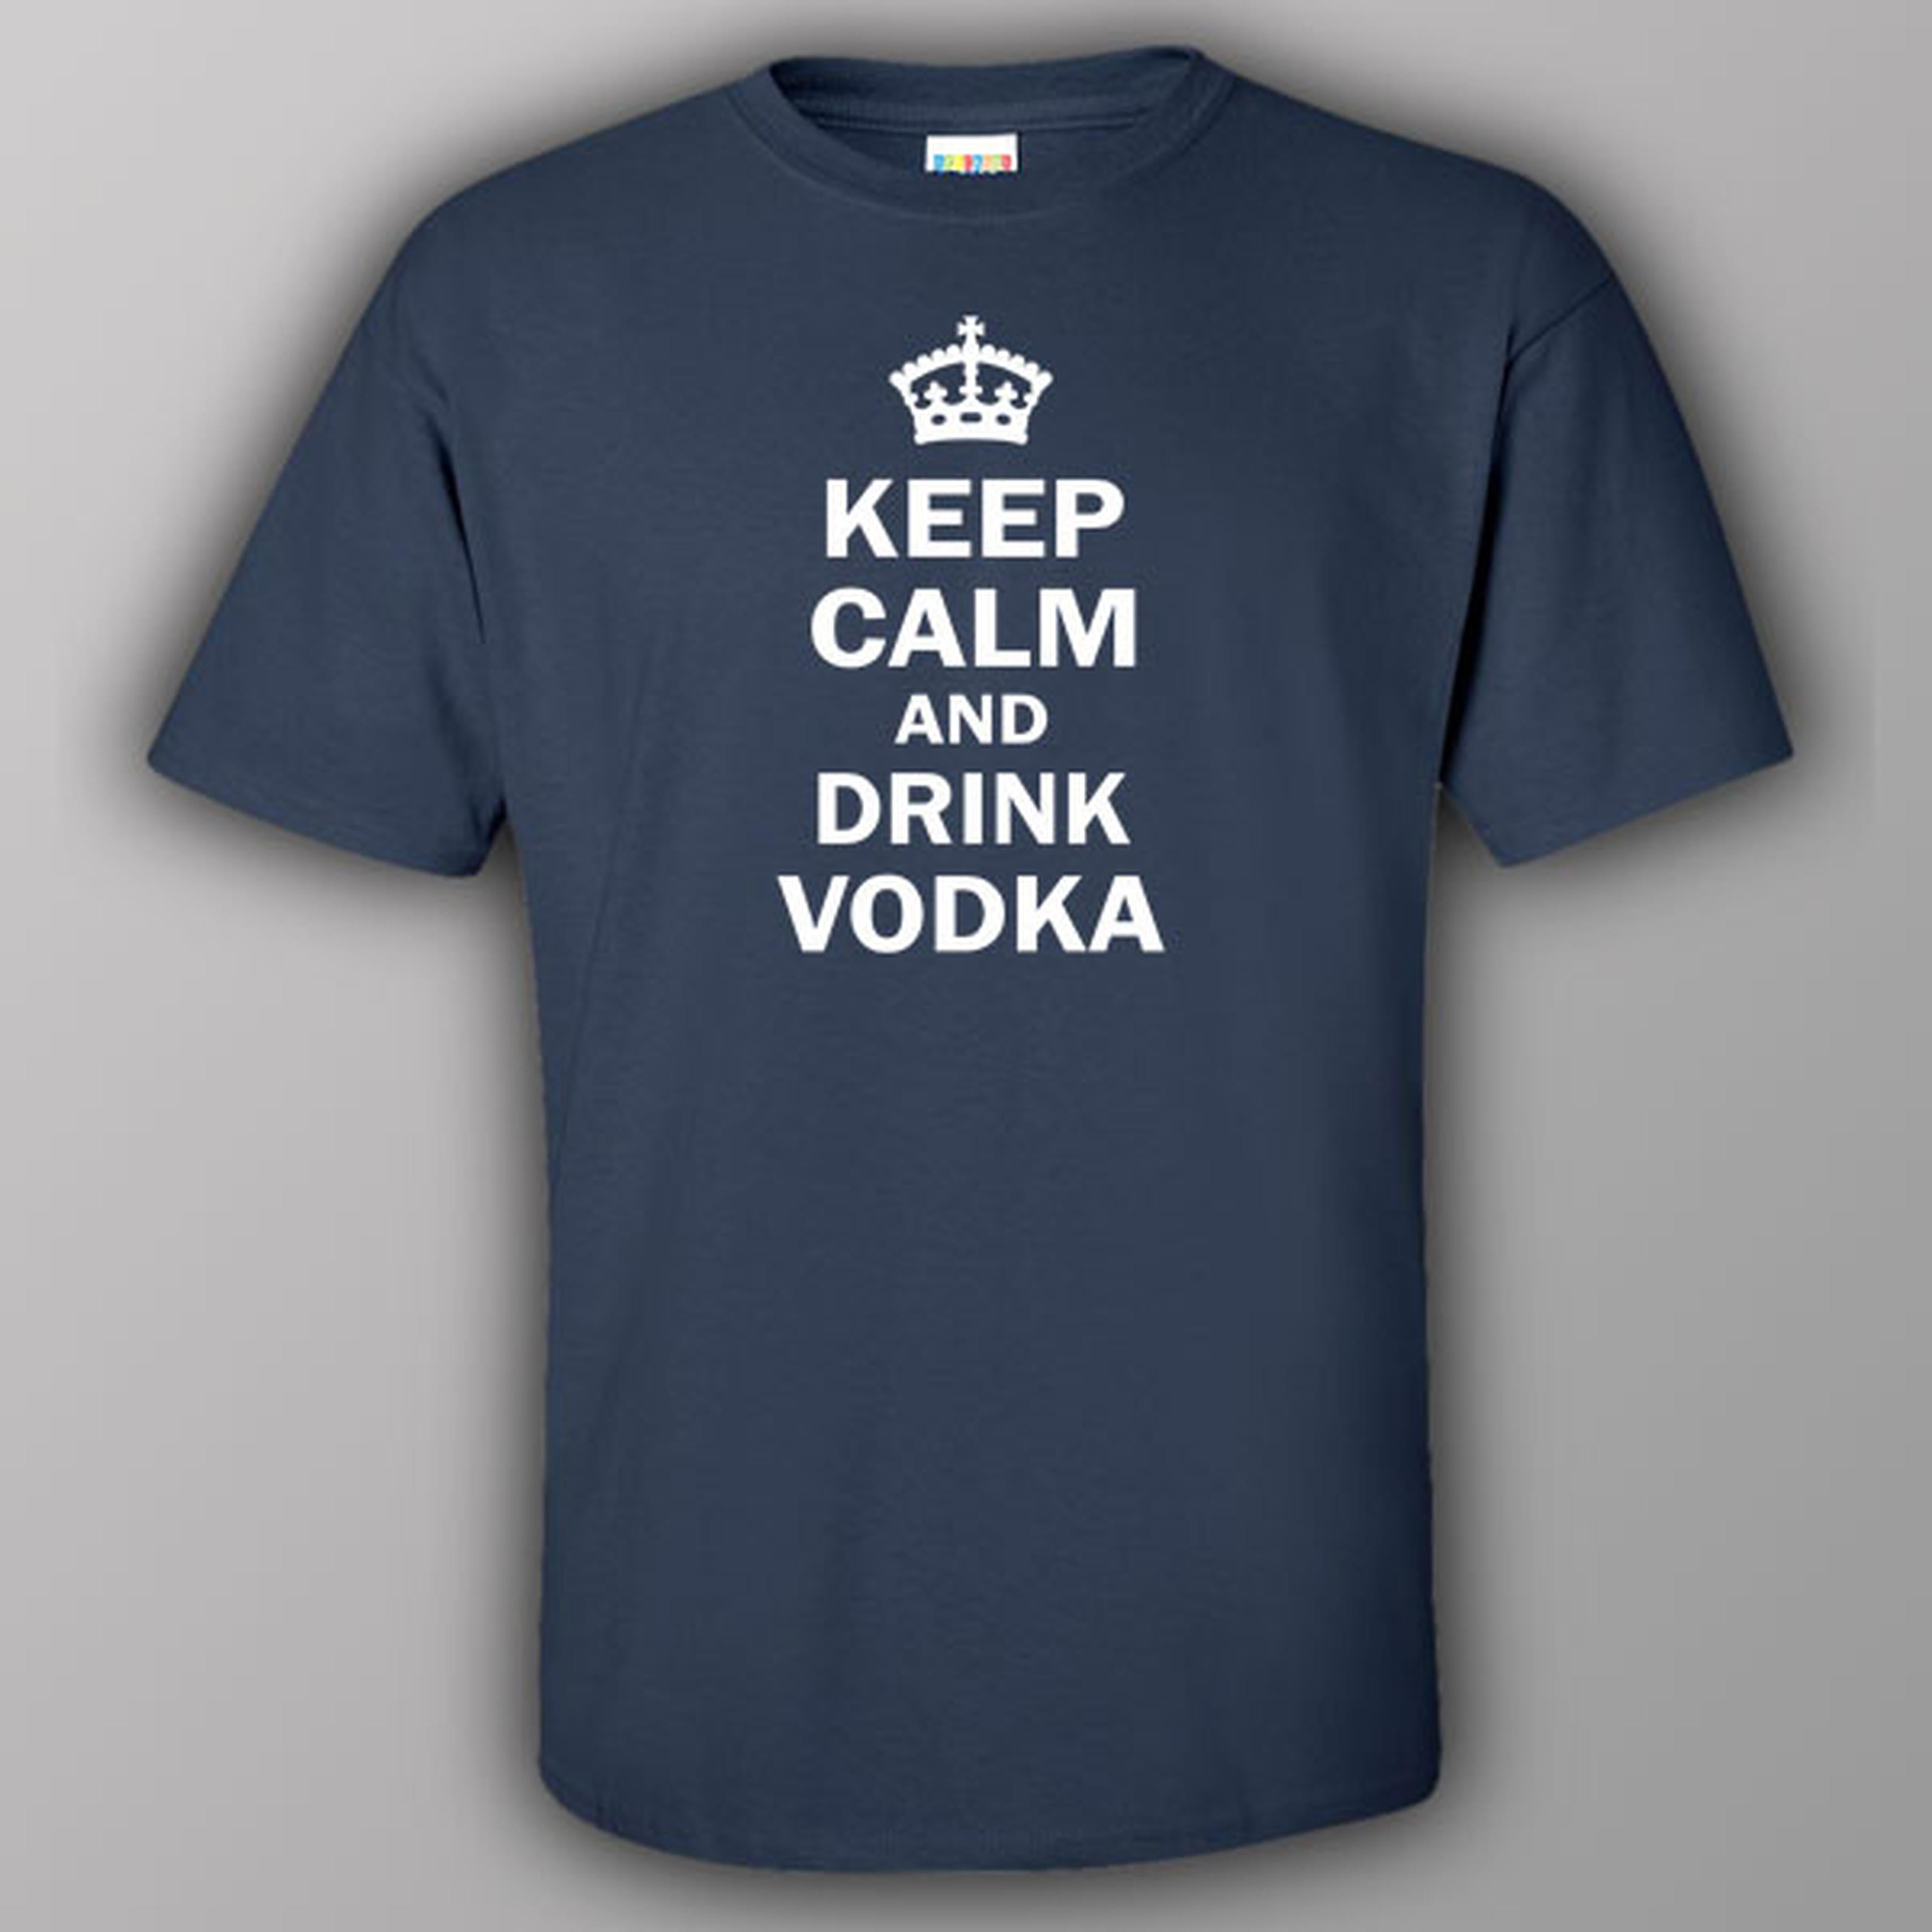 Keep calm and drink vodka - T-shirt